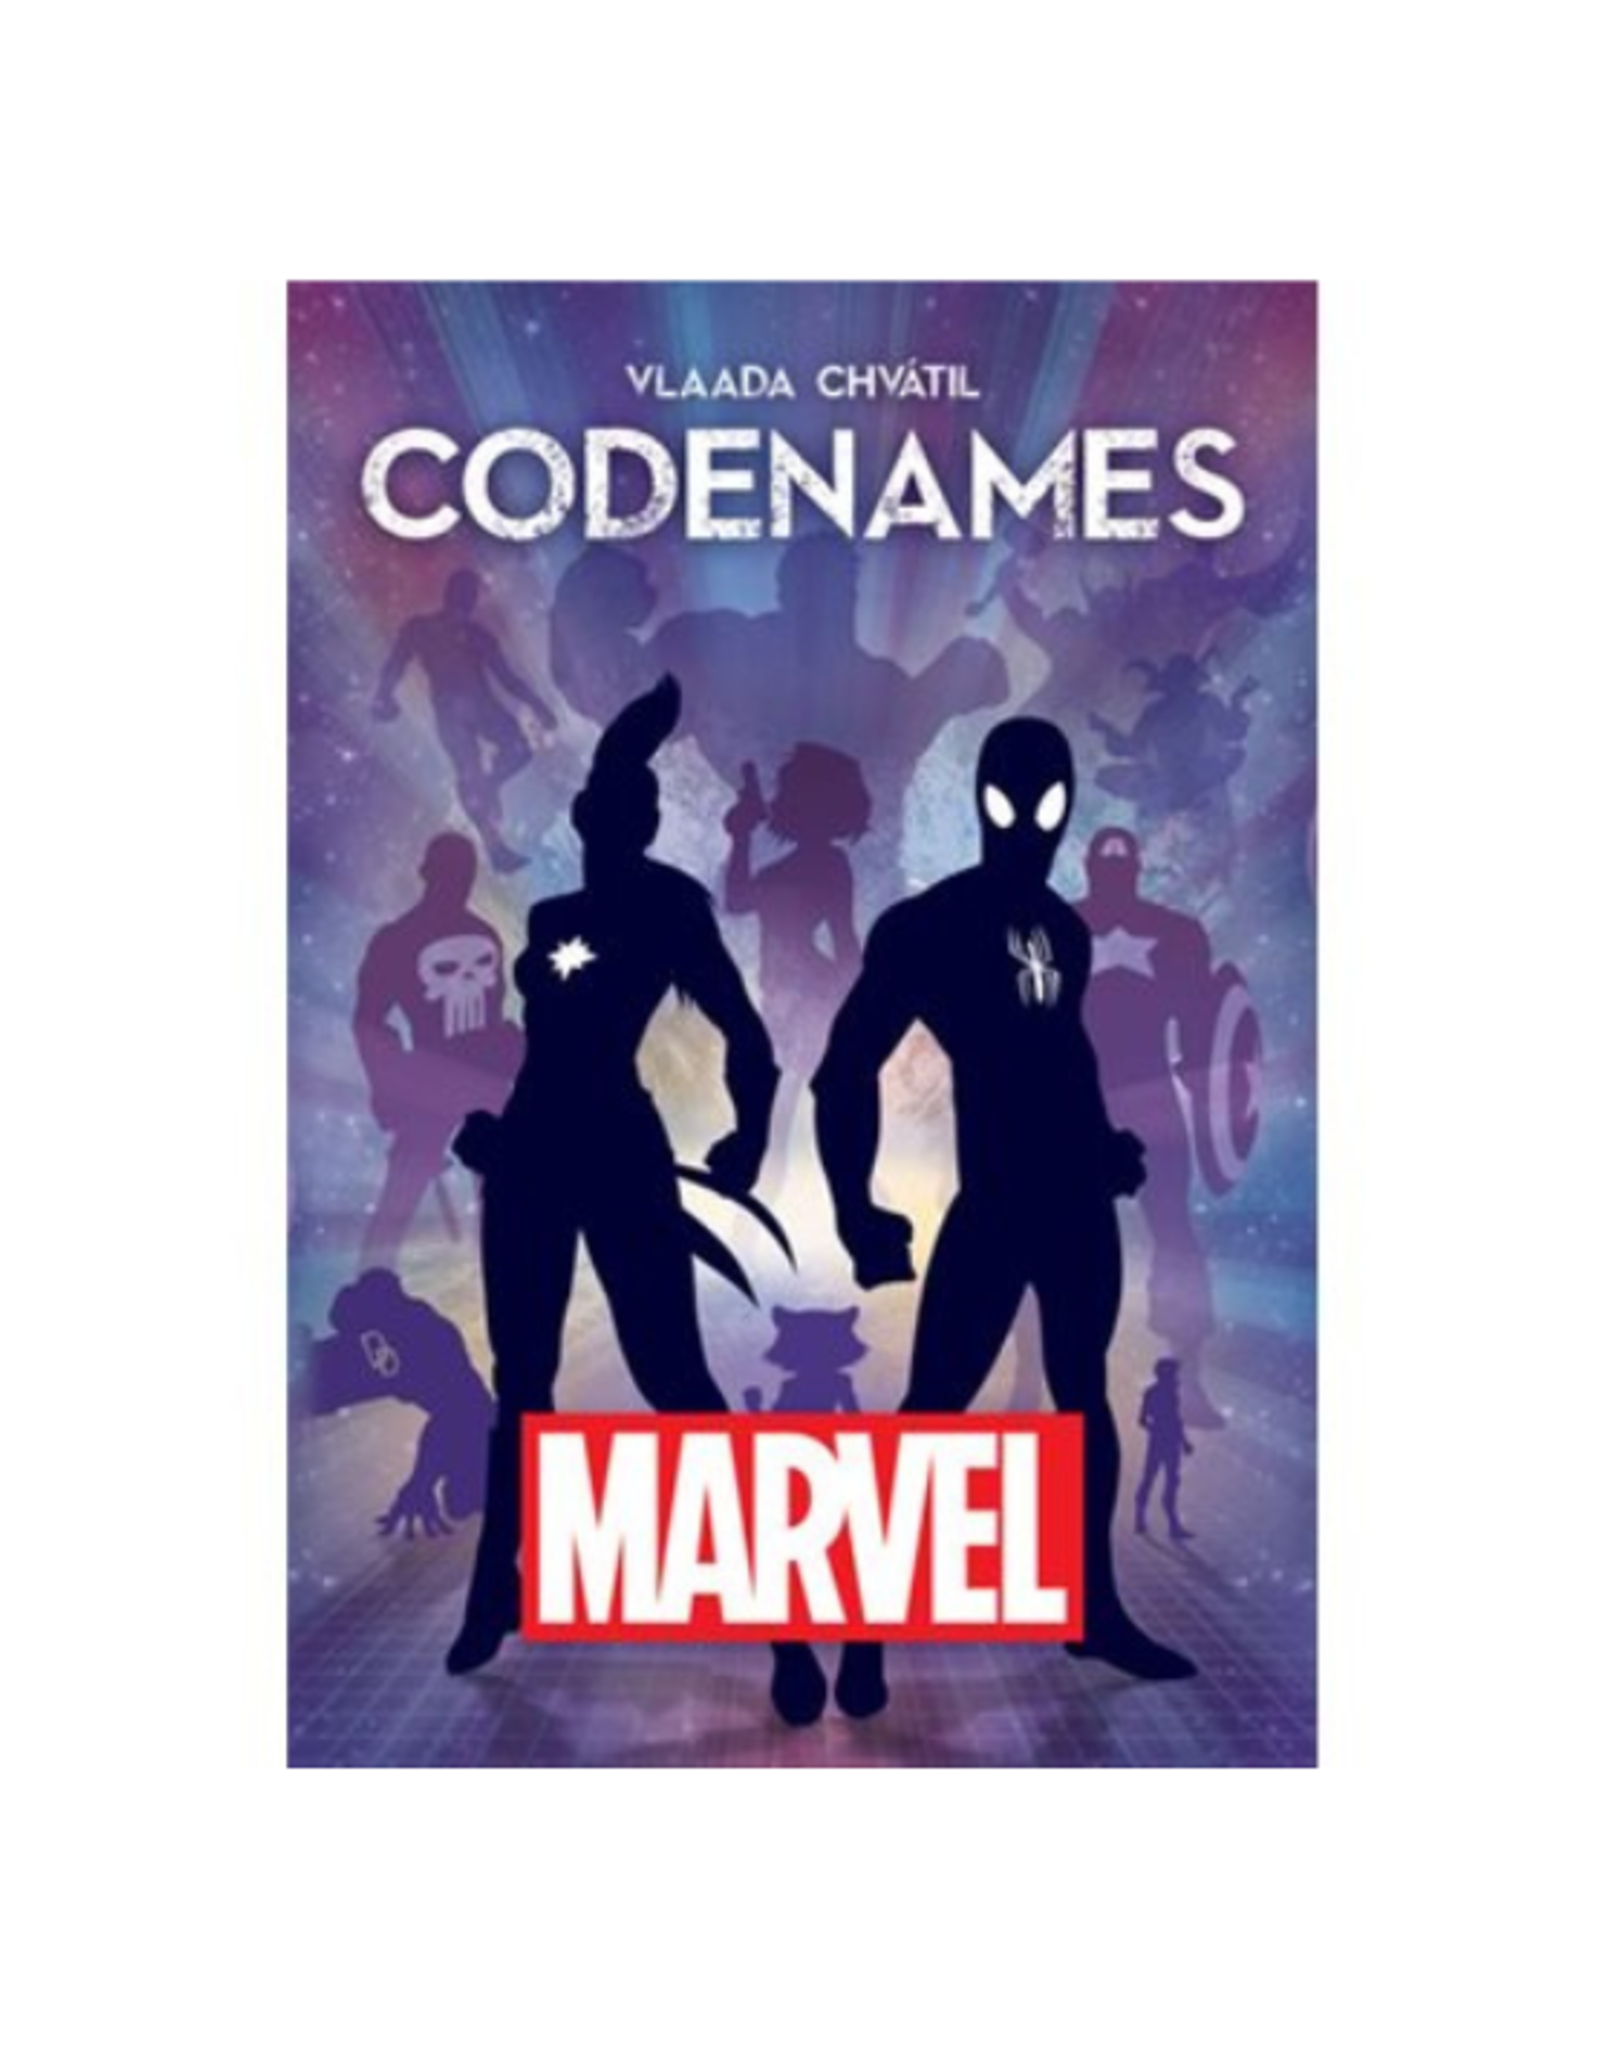 CGE - Codenames: Marvel Edition